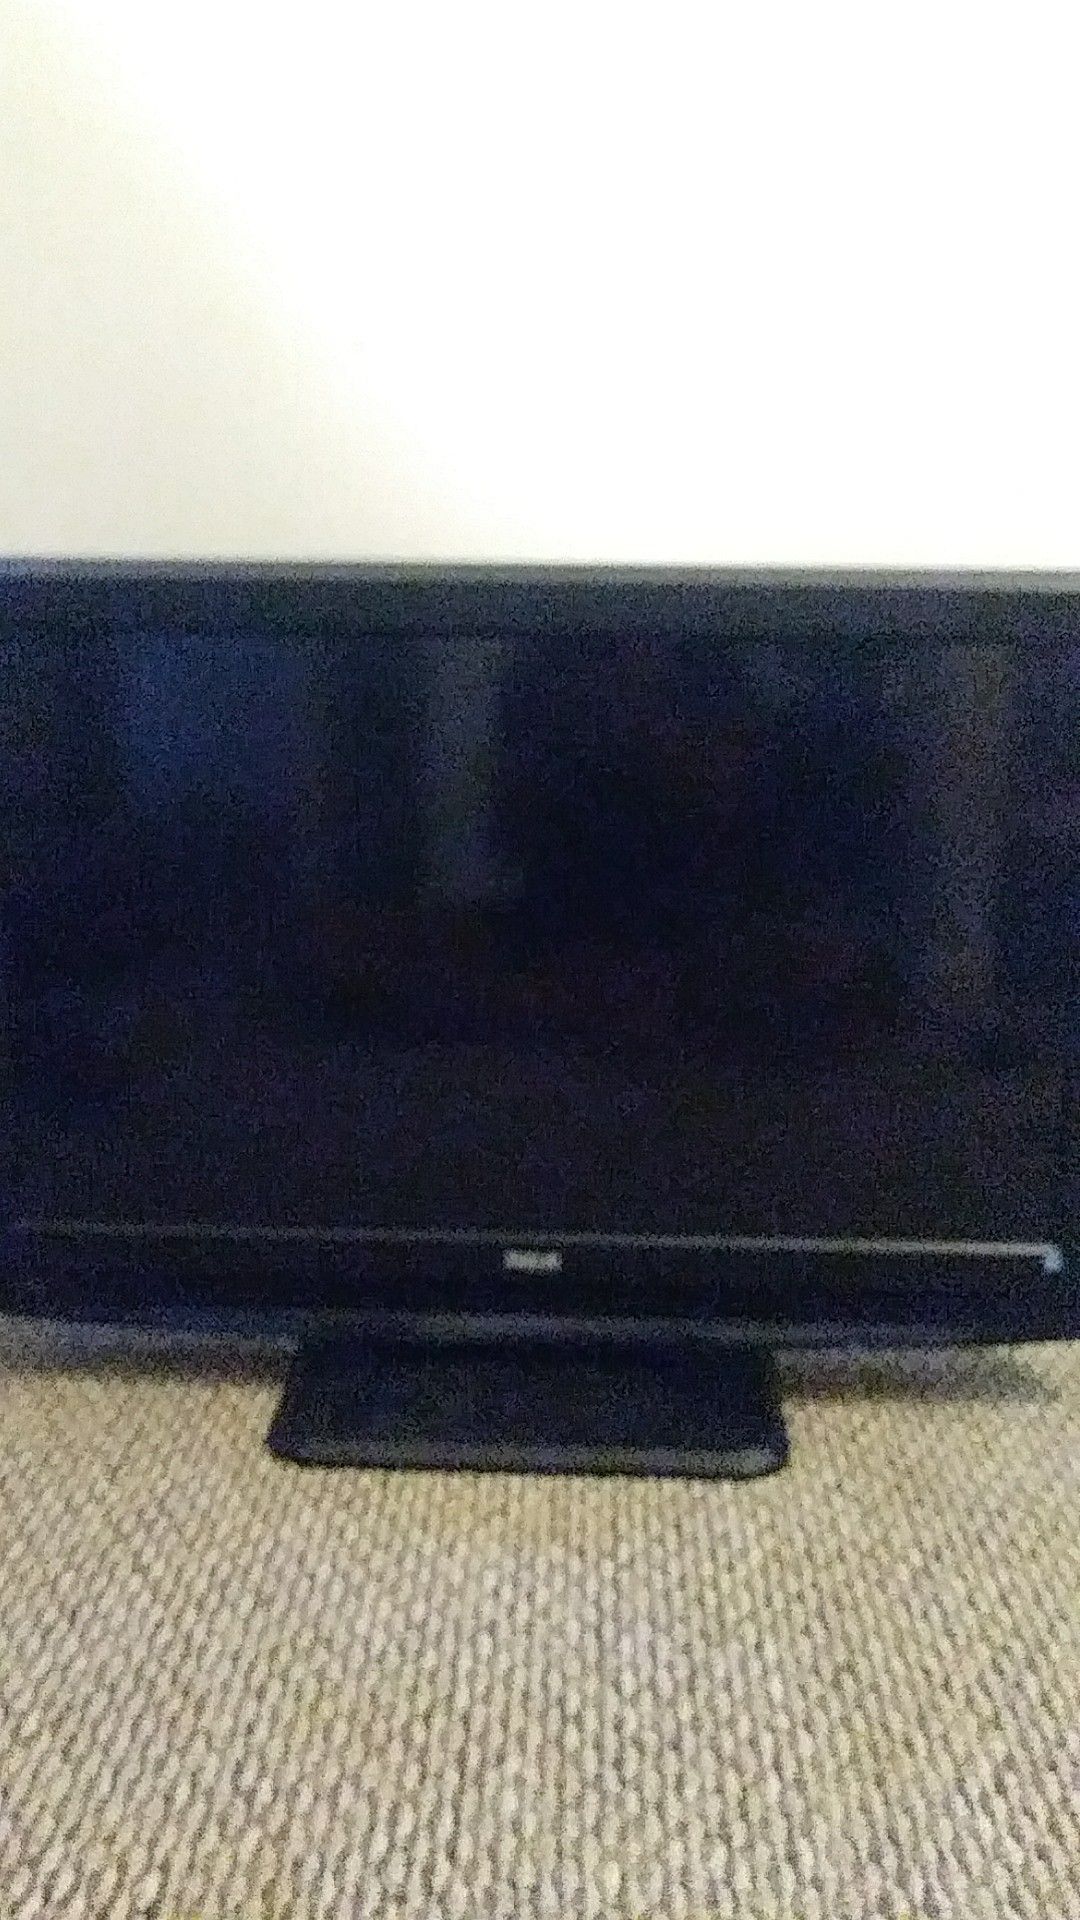 RCA 32 inch tv (good condition)